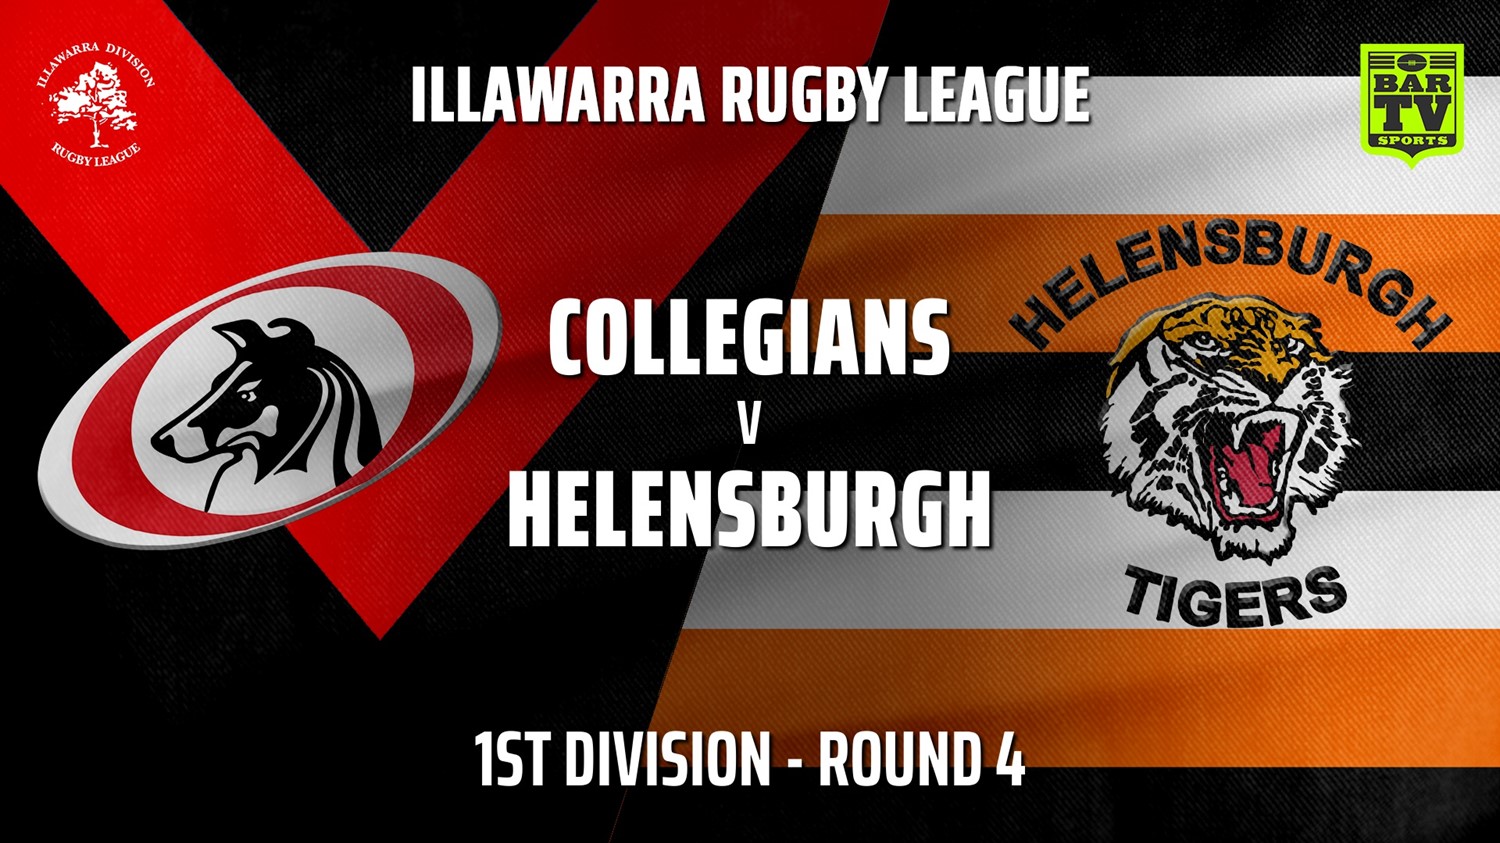 210501-IRL Round 4 - 1st Division - Collegians v Helensburgh Tigers Slate Image